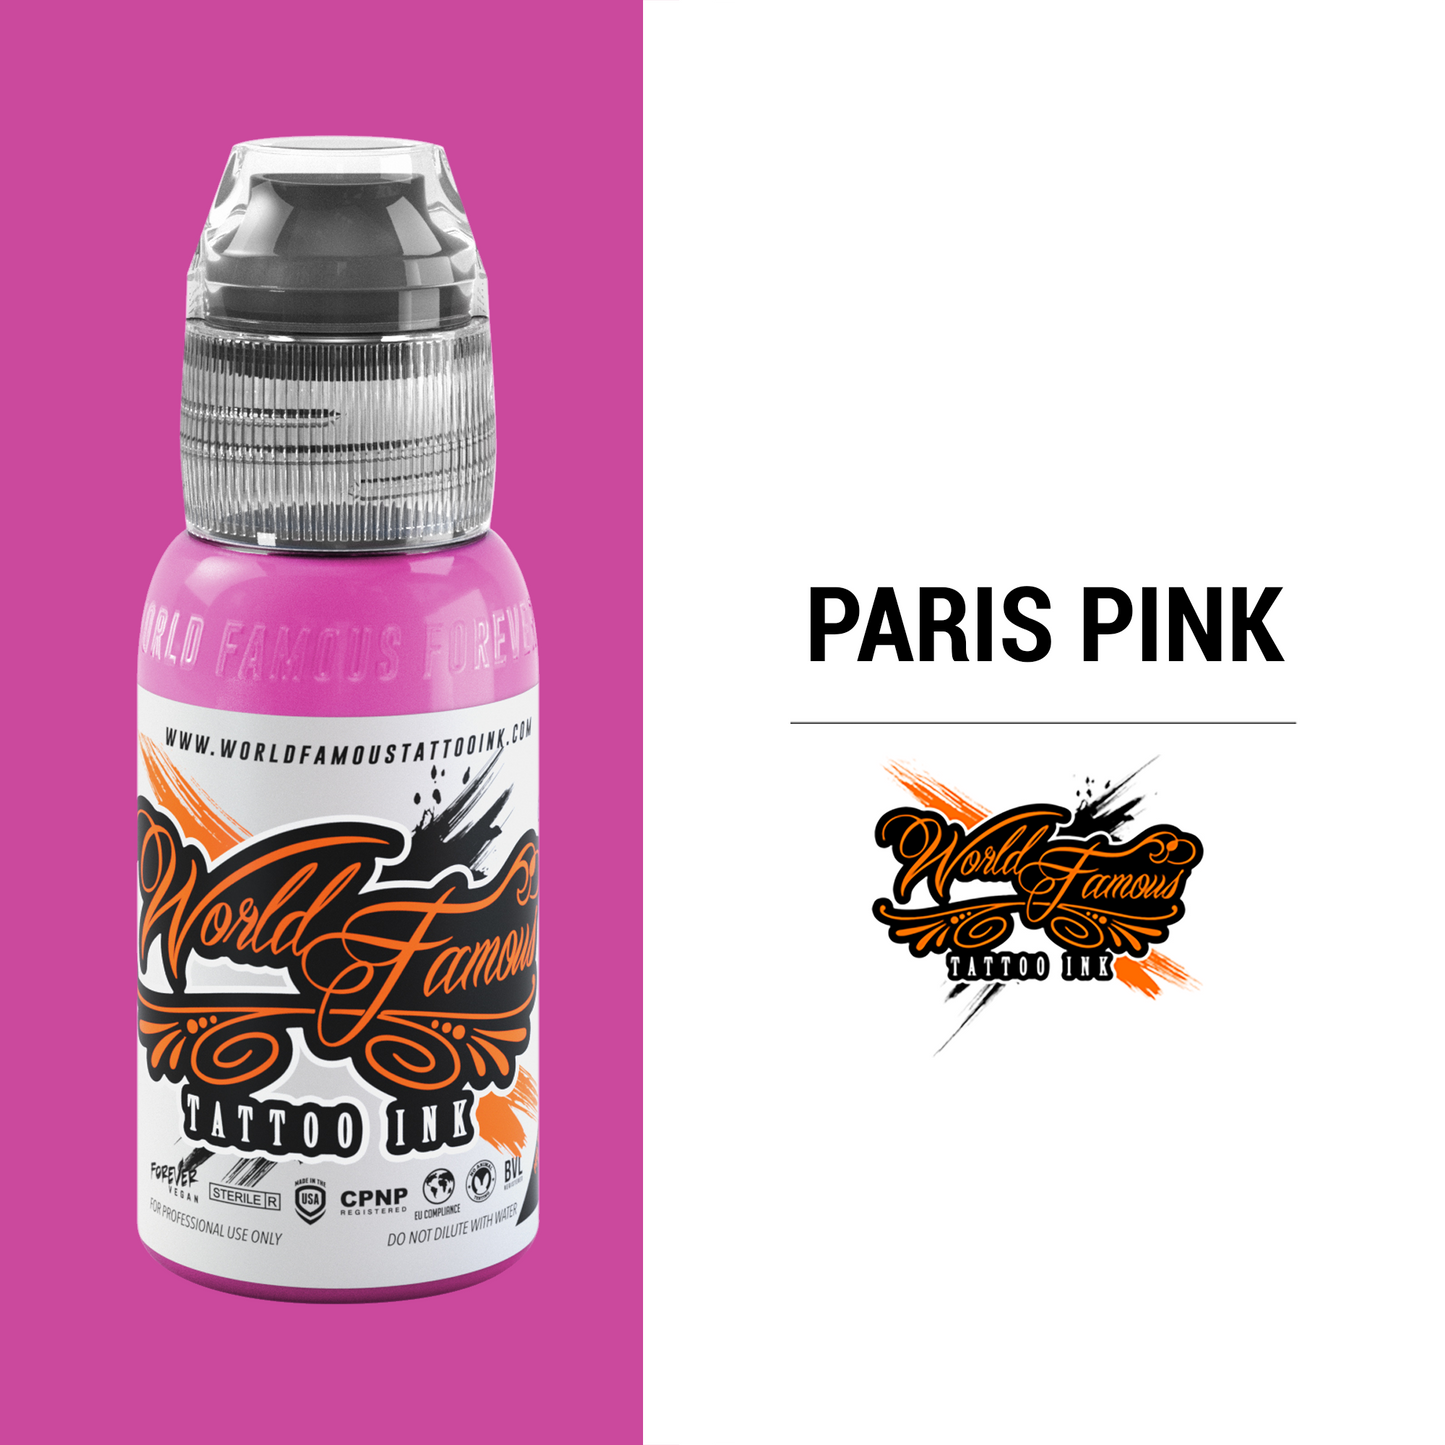 Paris Pink | World Famous Tattoo Ink